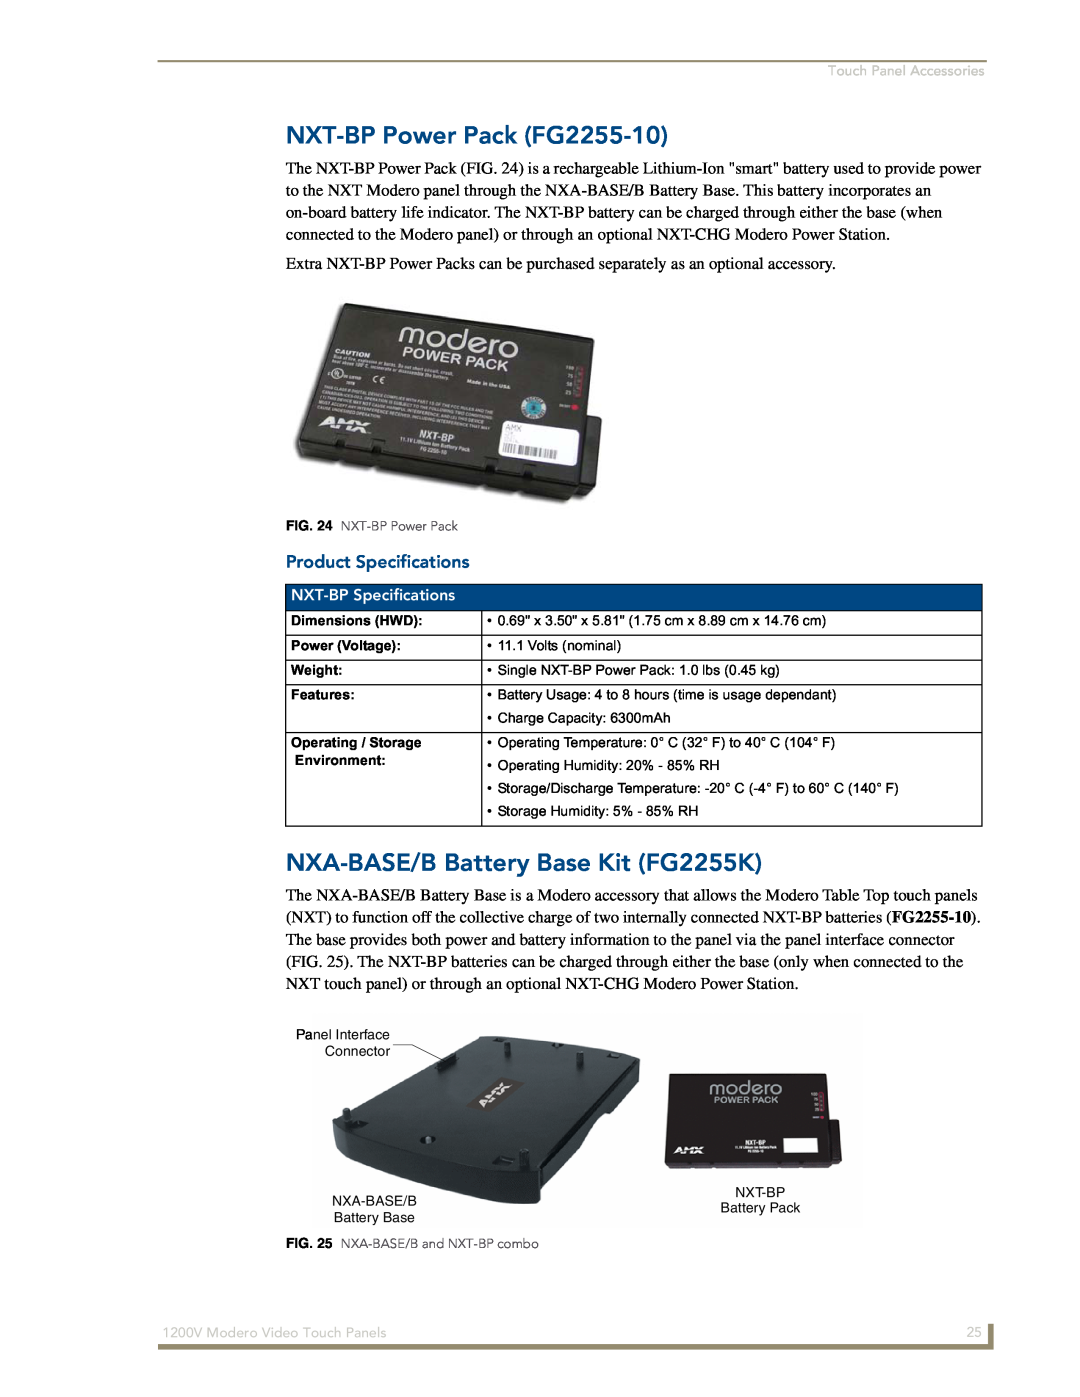 AMX NXT-1200V manual NXT-BP Power Pack FG2255-10, NXA-BASE/B Battery Base Kit FG2255K, Product Specifications 